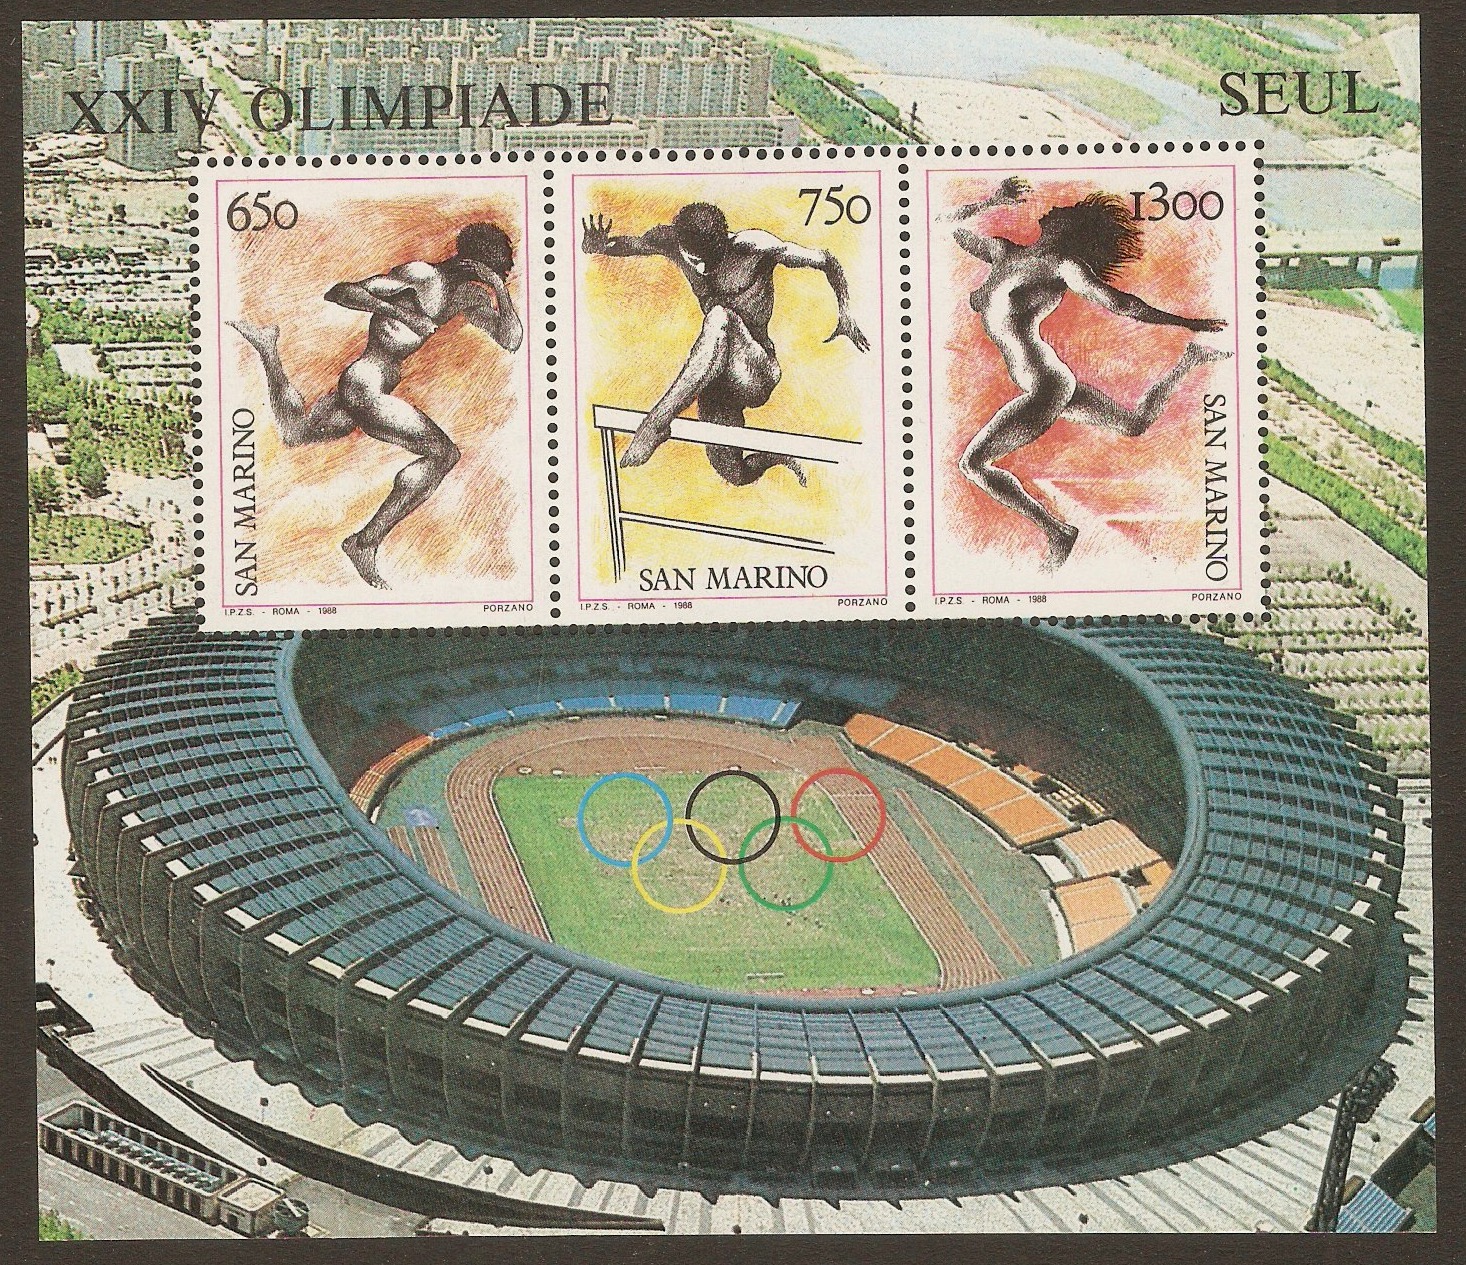 San Marino 1988 Olympic Games sheet. SGMS1330.